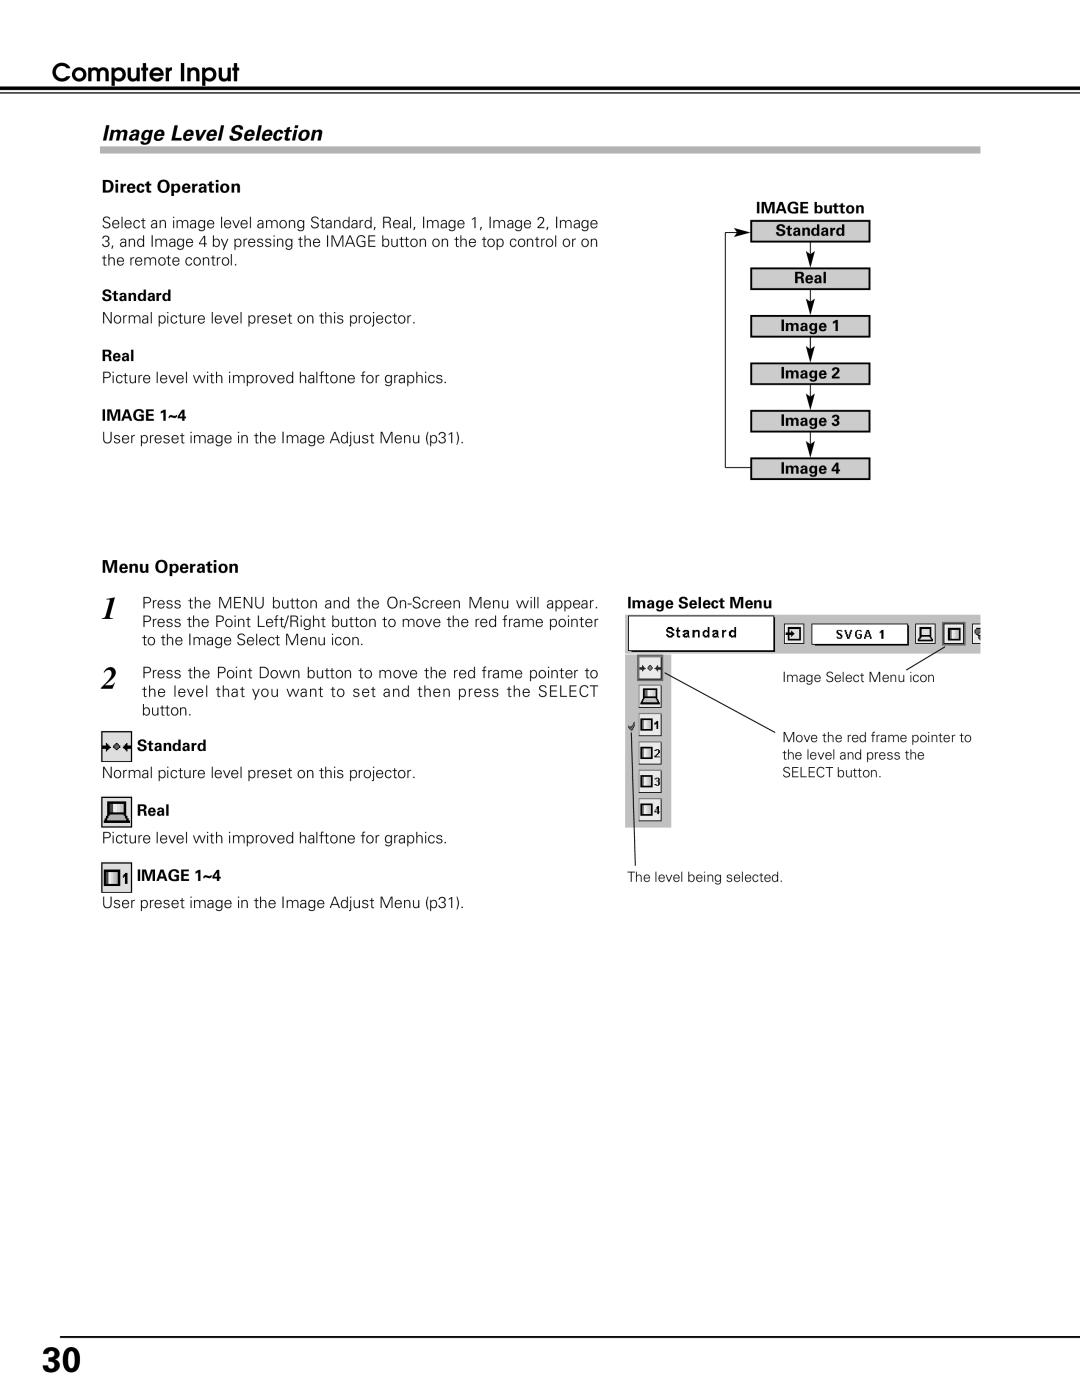 Eiki LC-XE10 instruction manual Image Level Selection, Computer Input, Standard, Real, IMAGE 1~4, Image Select Menu 